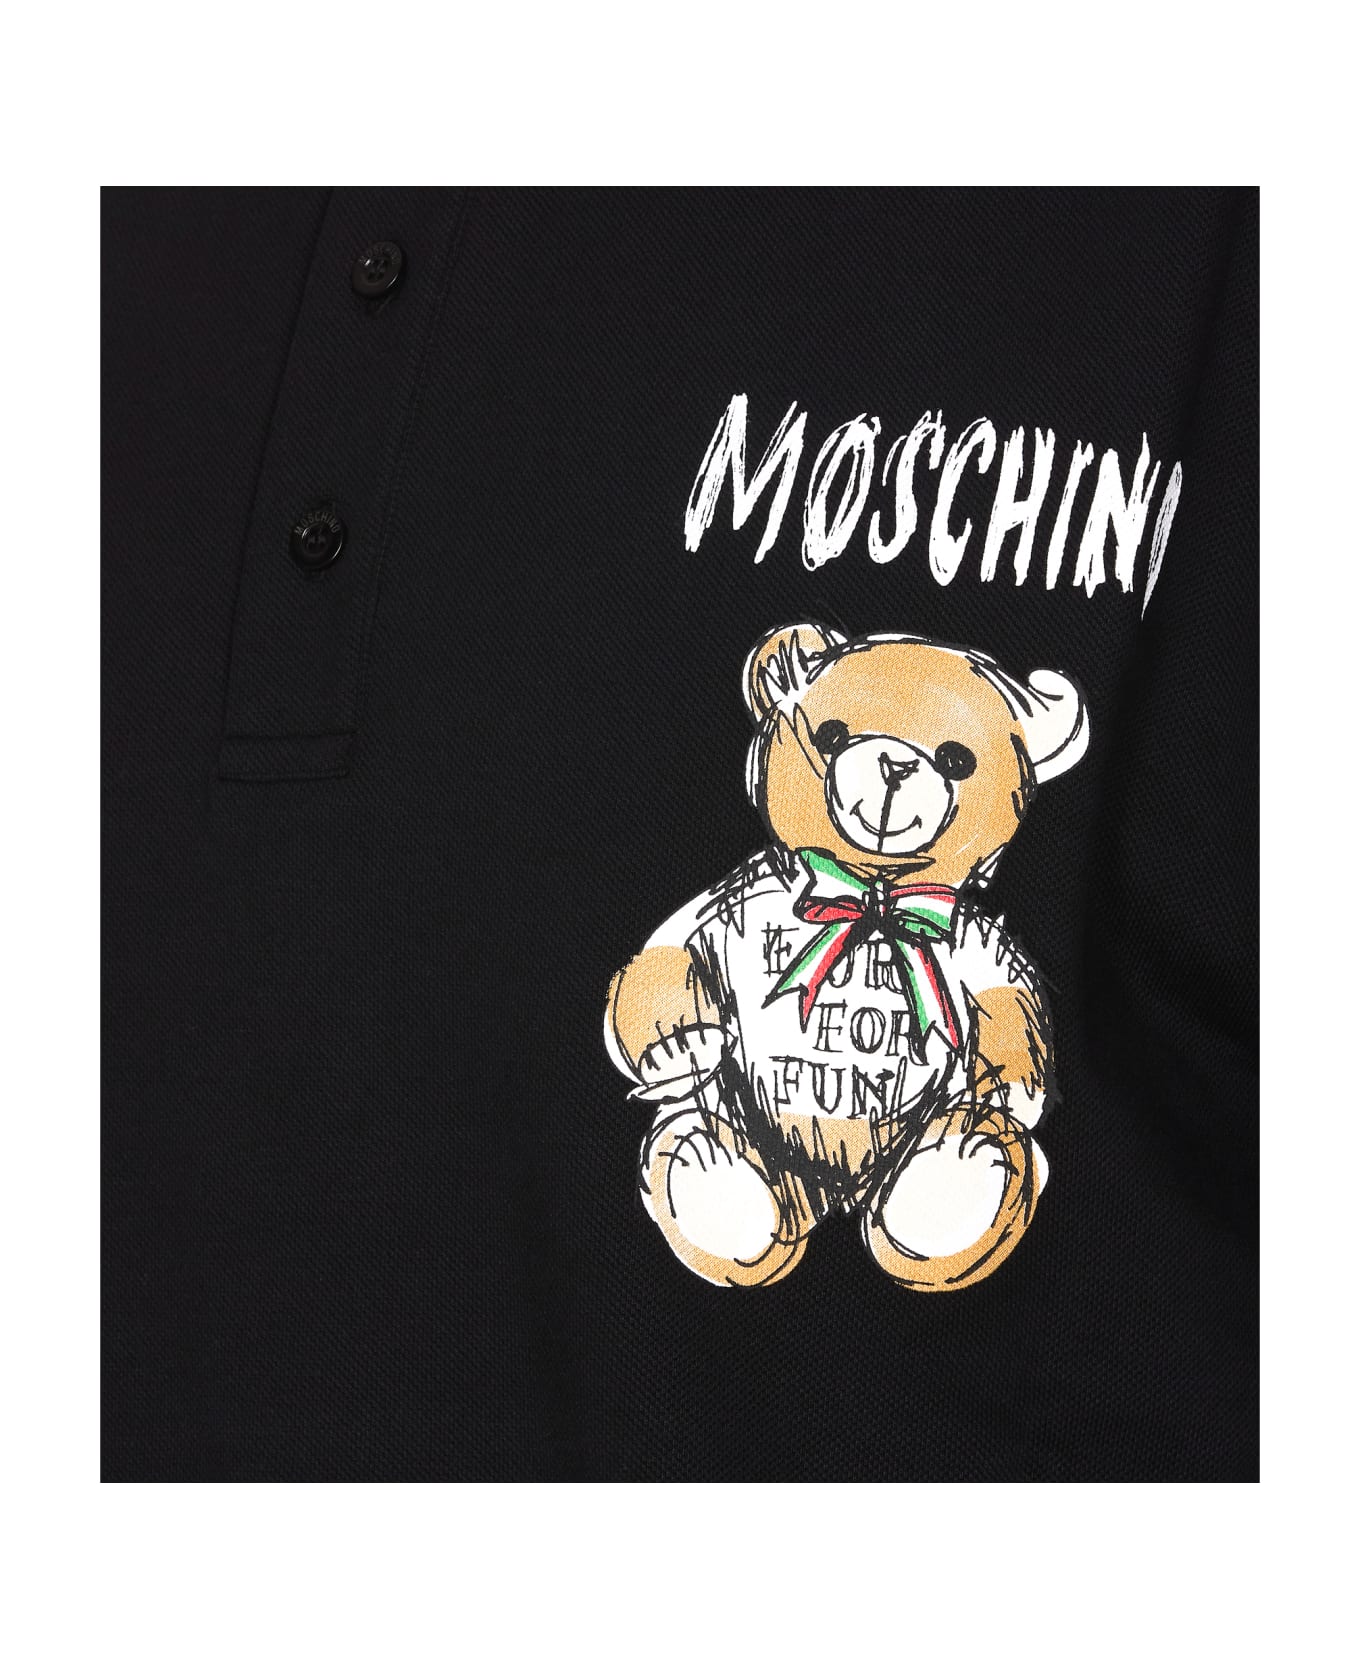 Moschino Drawn Teddy Bear Polo Shirt - Black